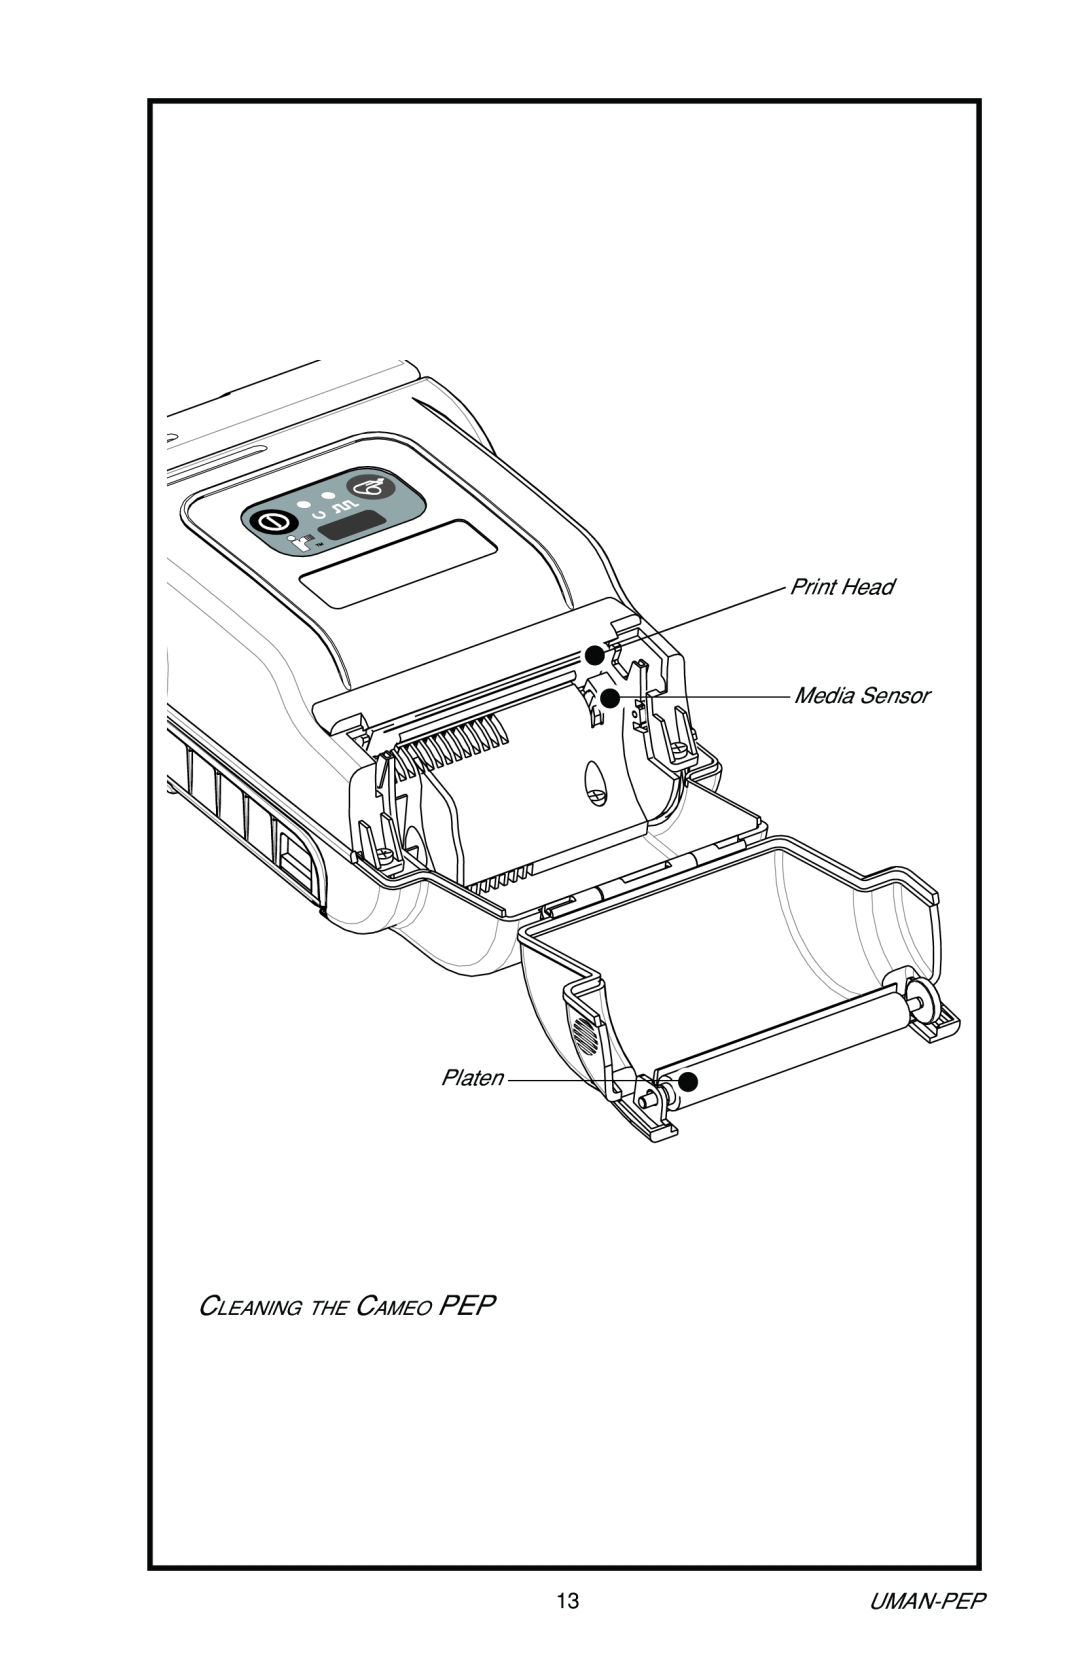 Zebra Technologies Portable Encoding Printer user manual Print Head, Media Sensor, Platen, Uman-Pep, Cleaning The Cameo Pep 